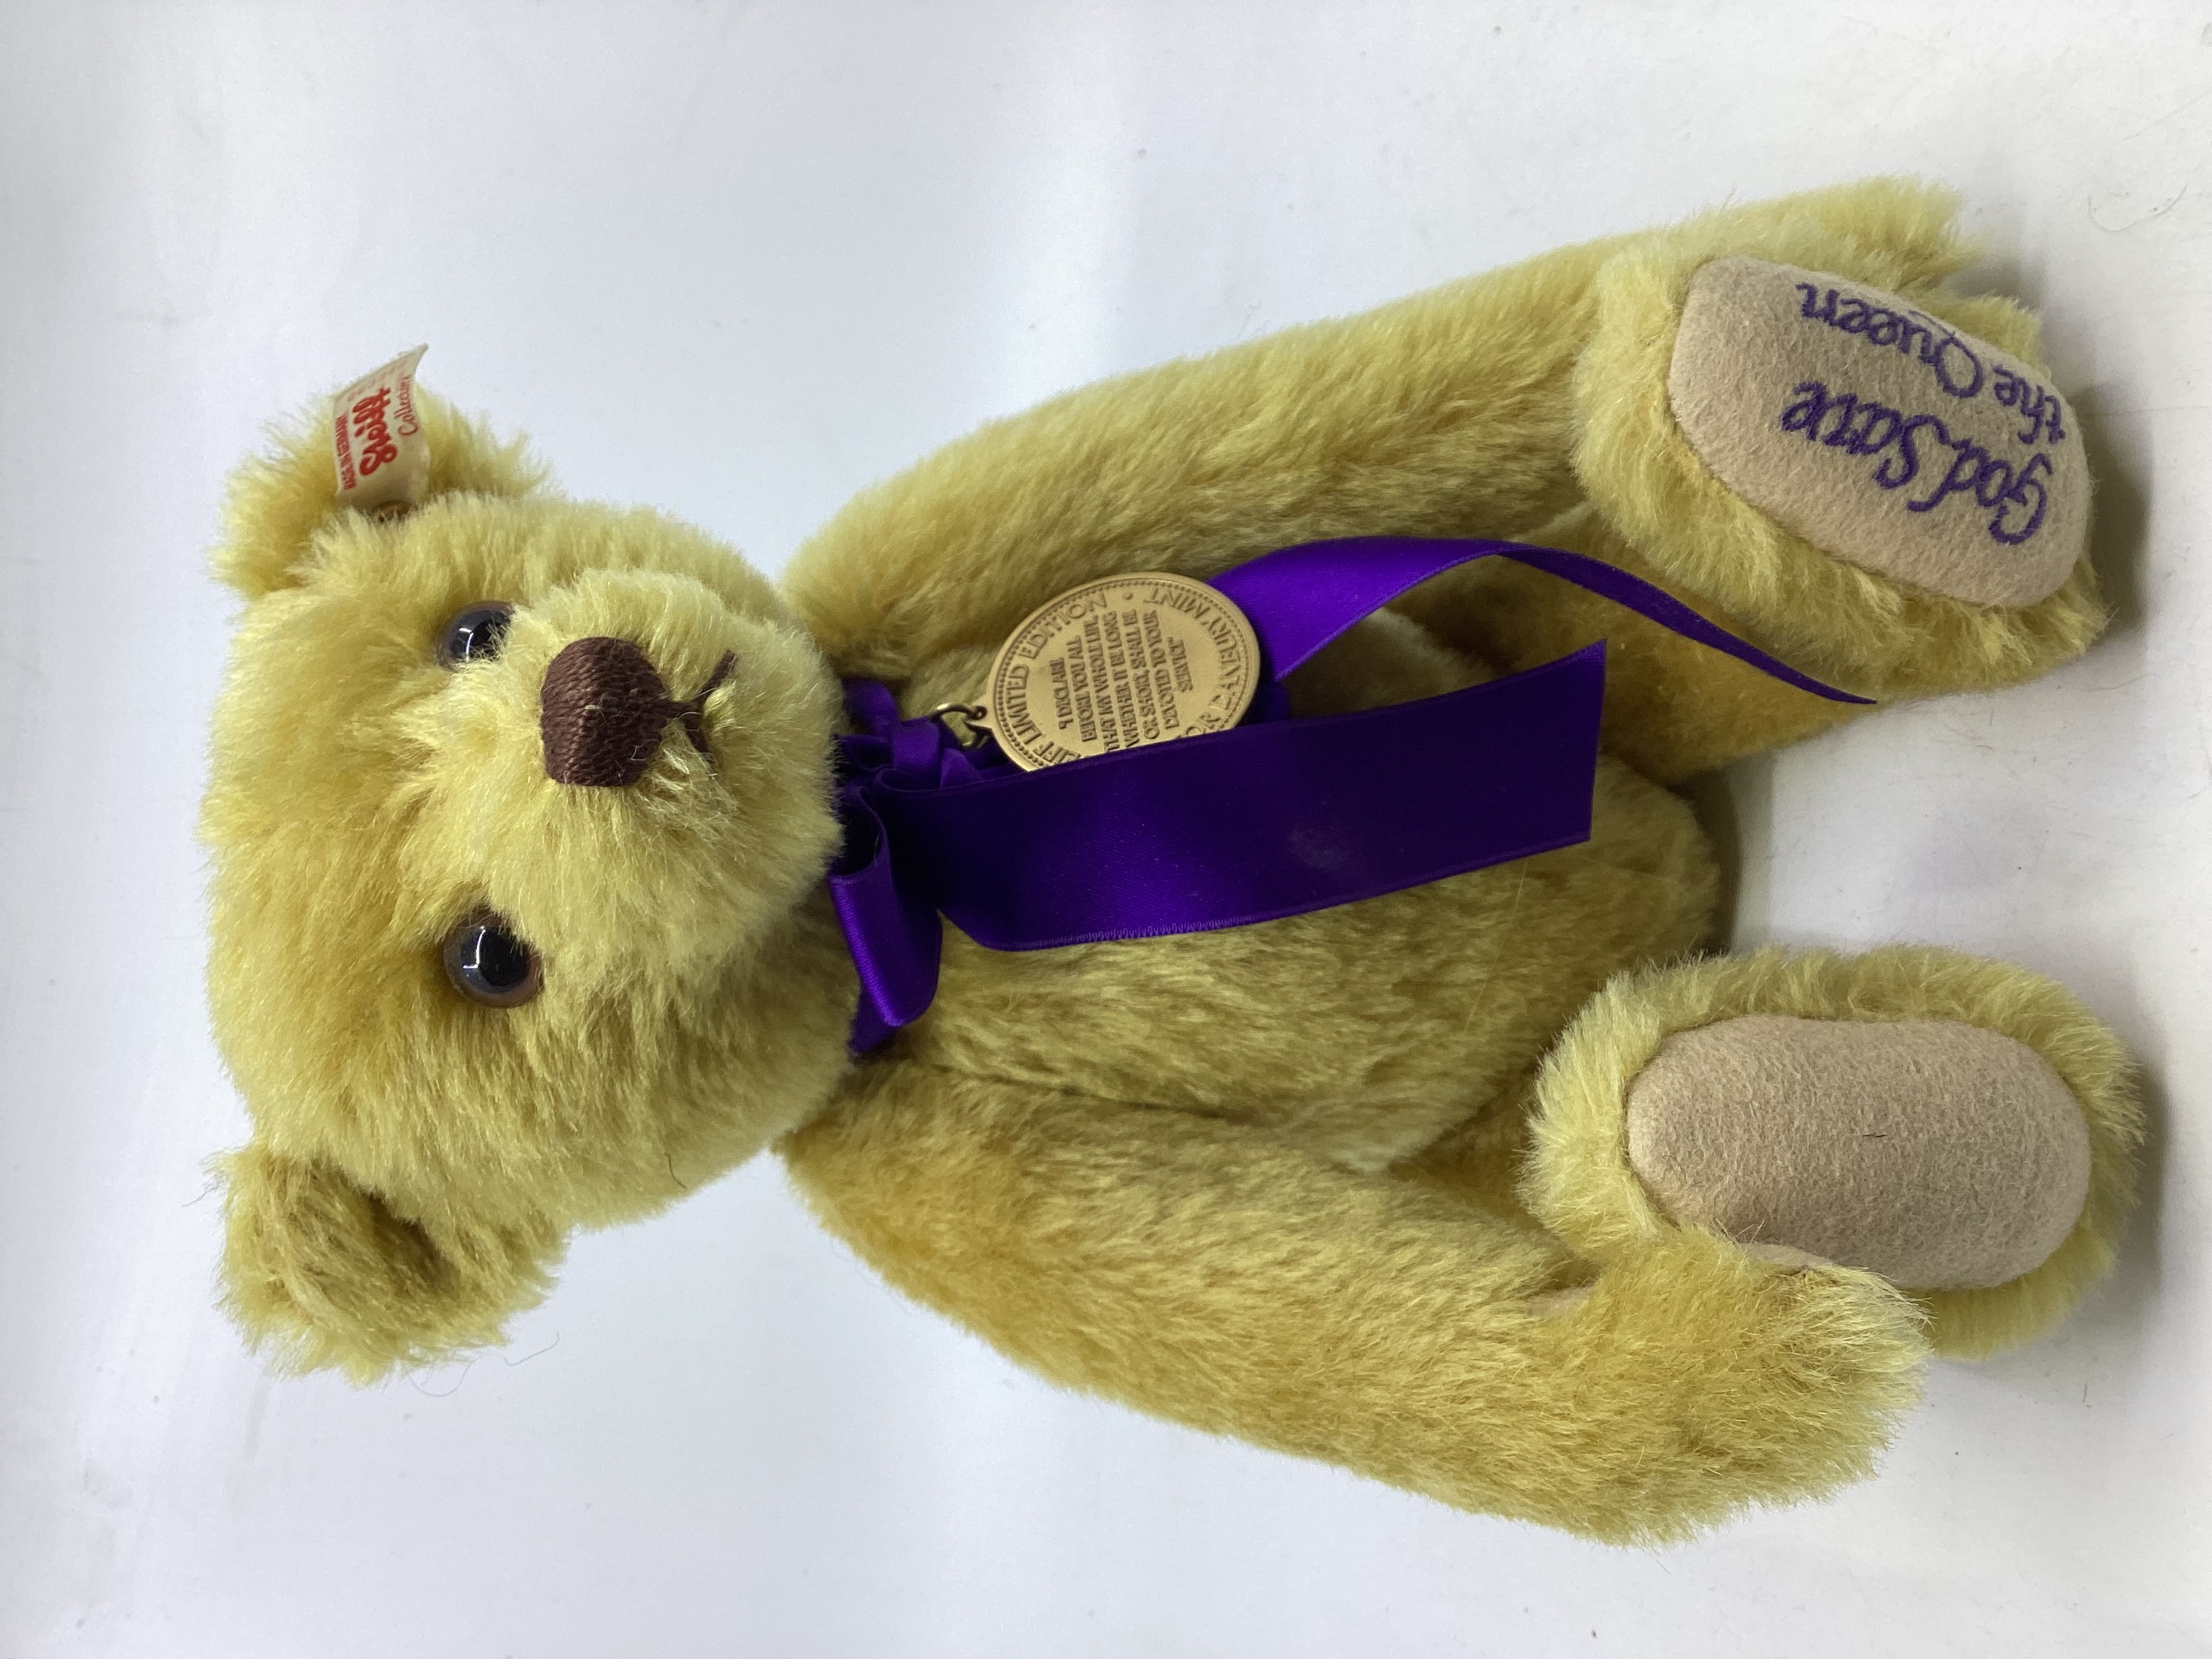 Steiff rarely seen model ; classic golden Traditional Musical teddy bear with musical clockwork